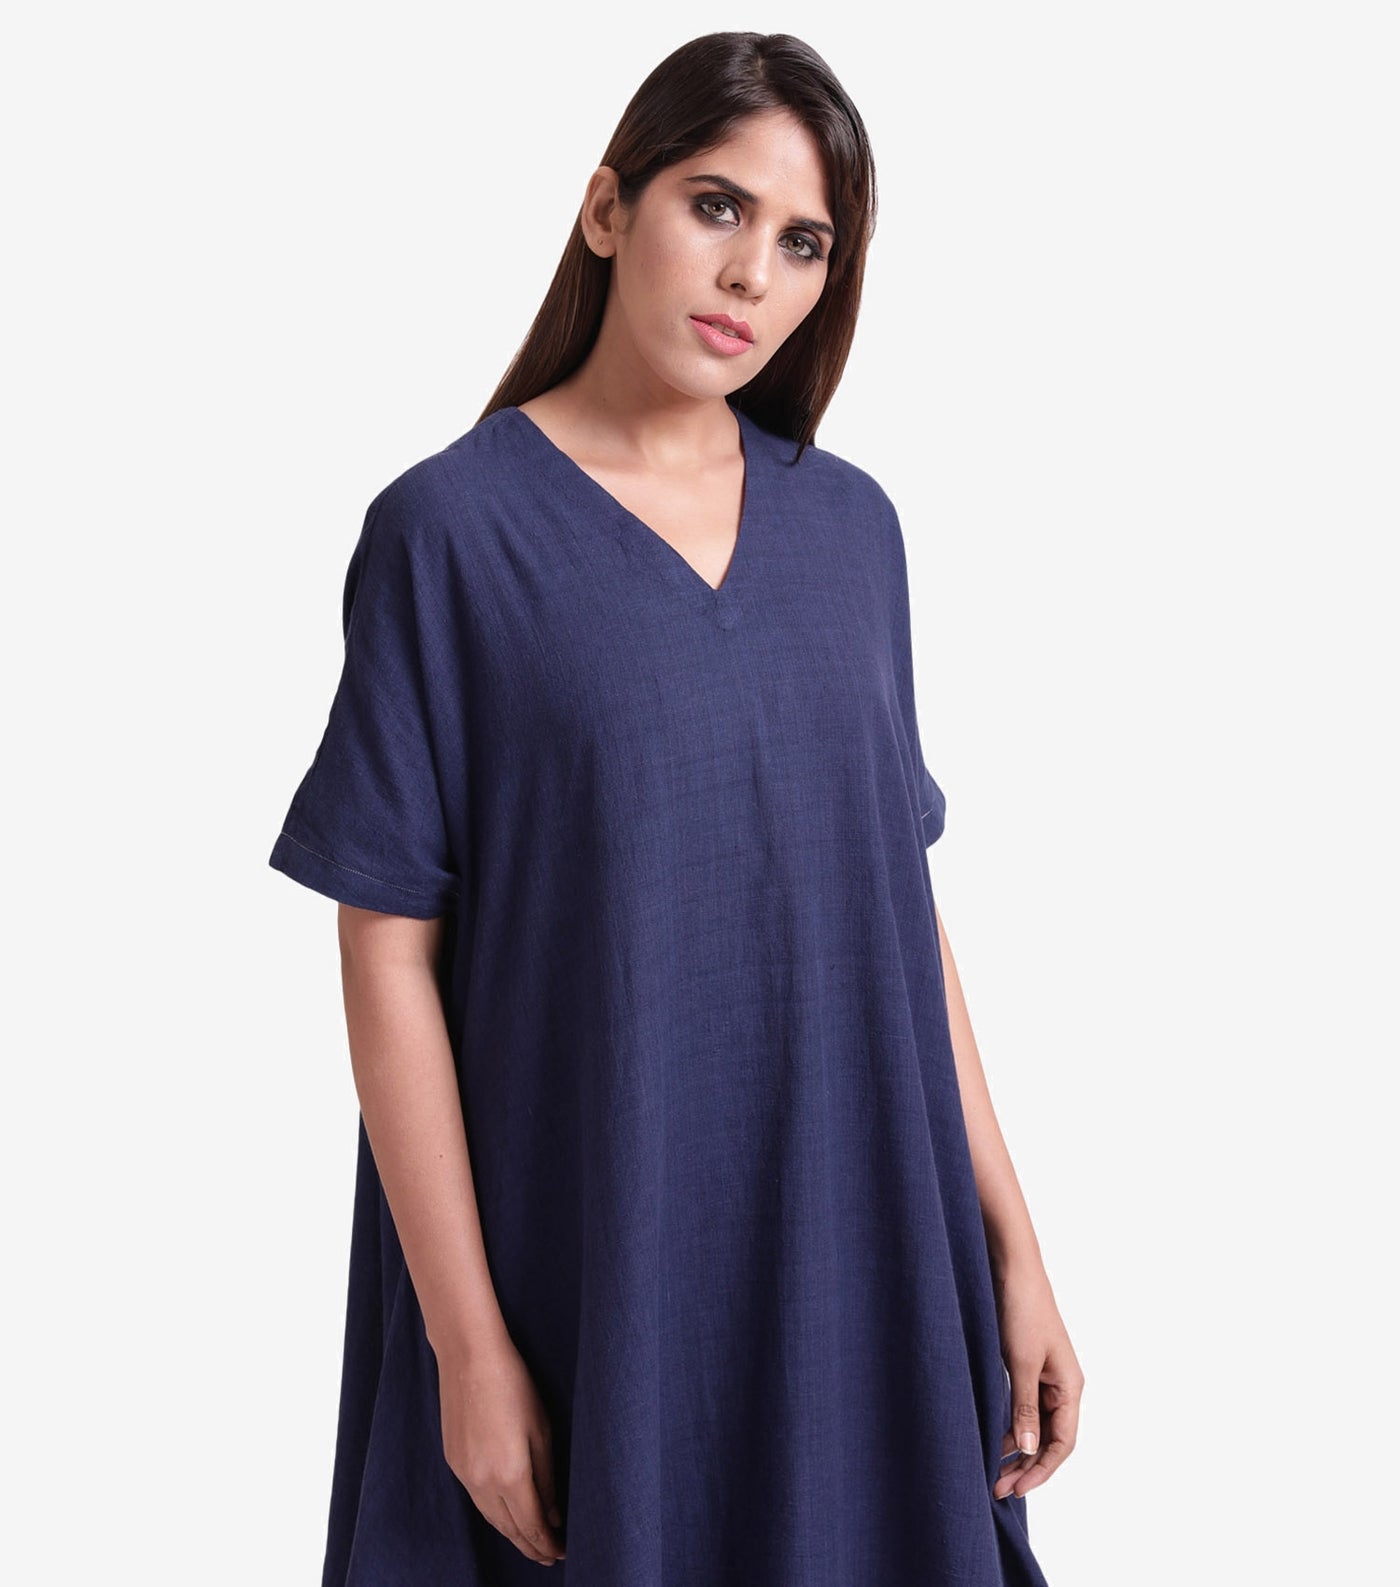 Navy blue solid khadi Dress